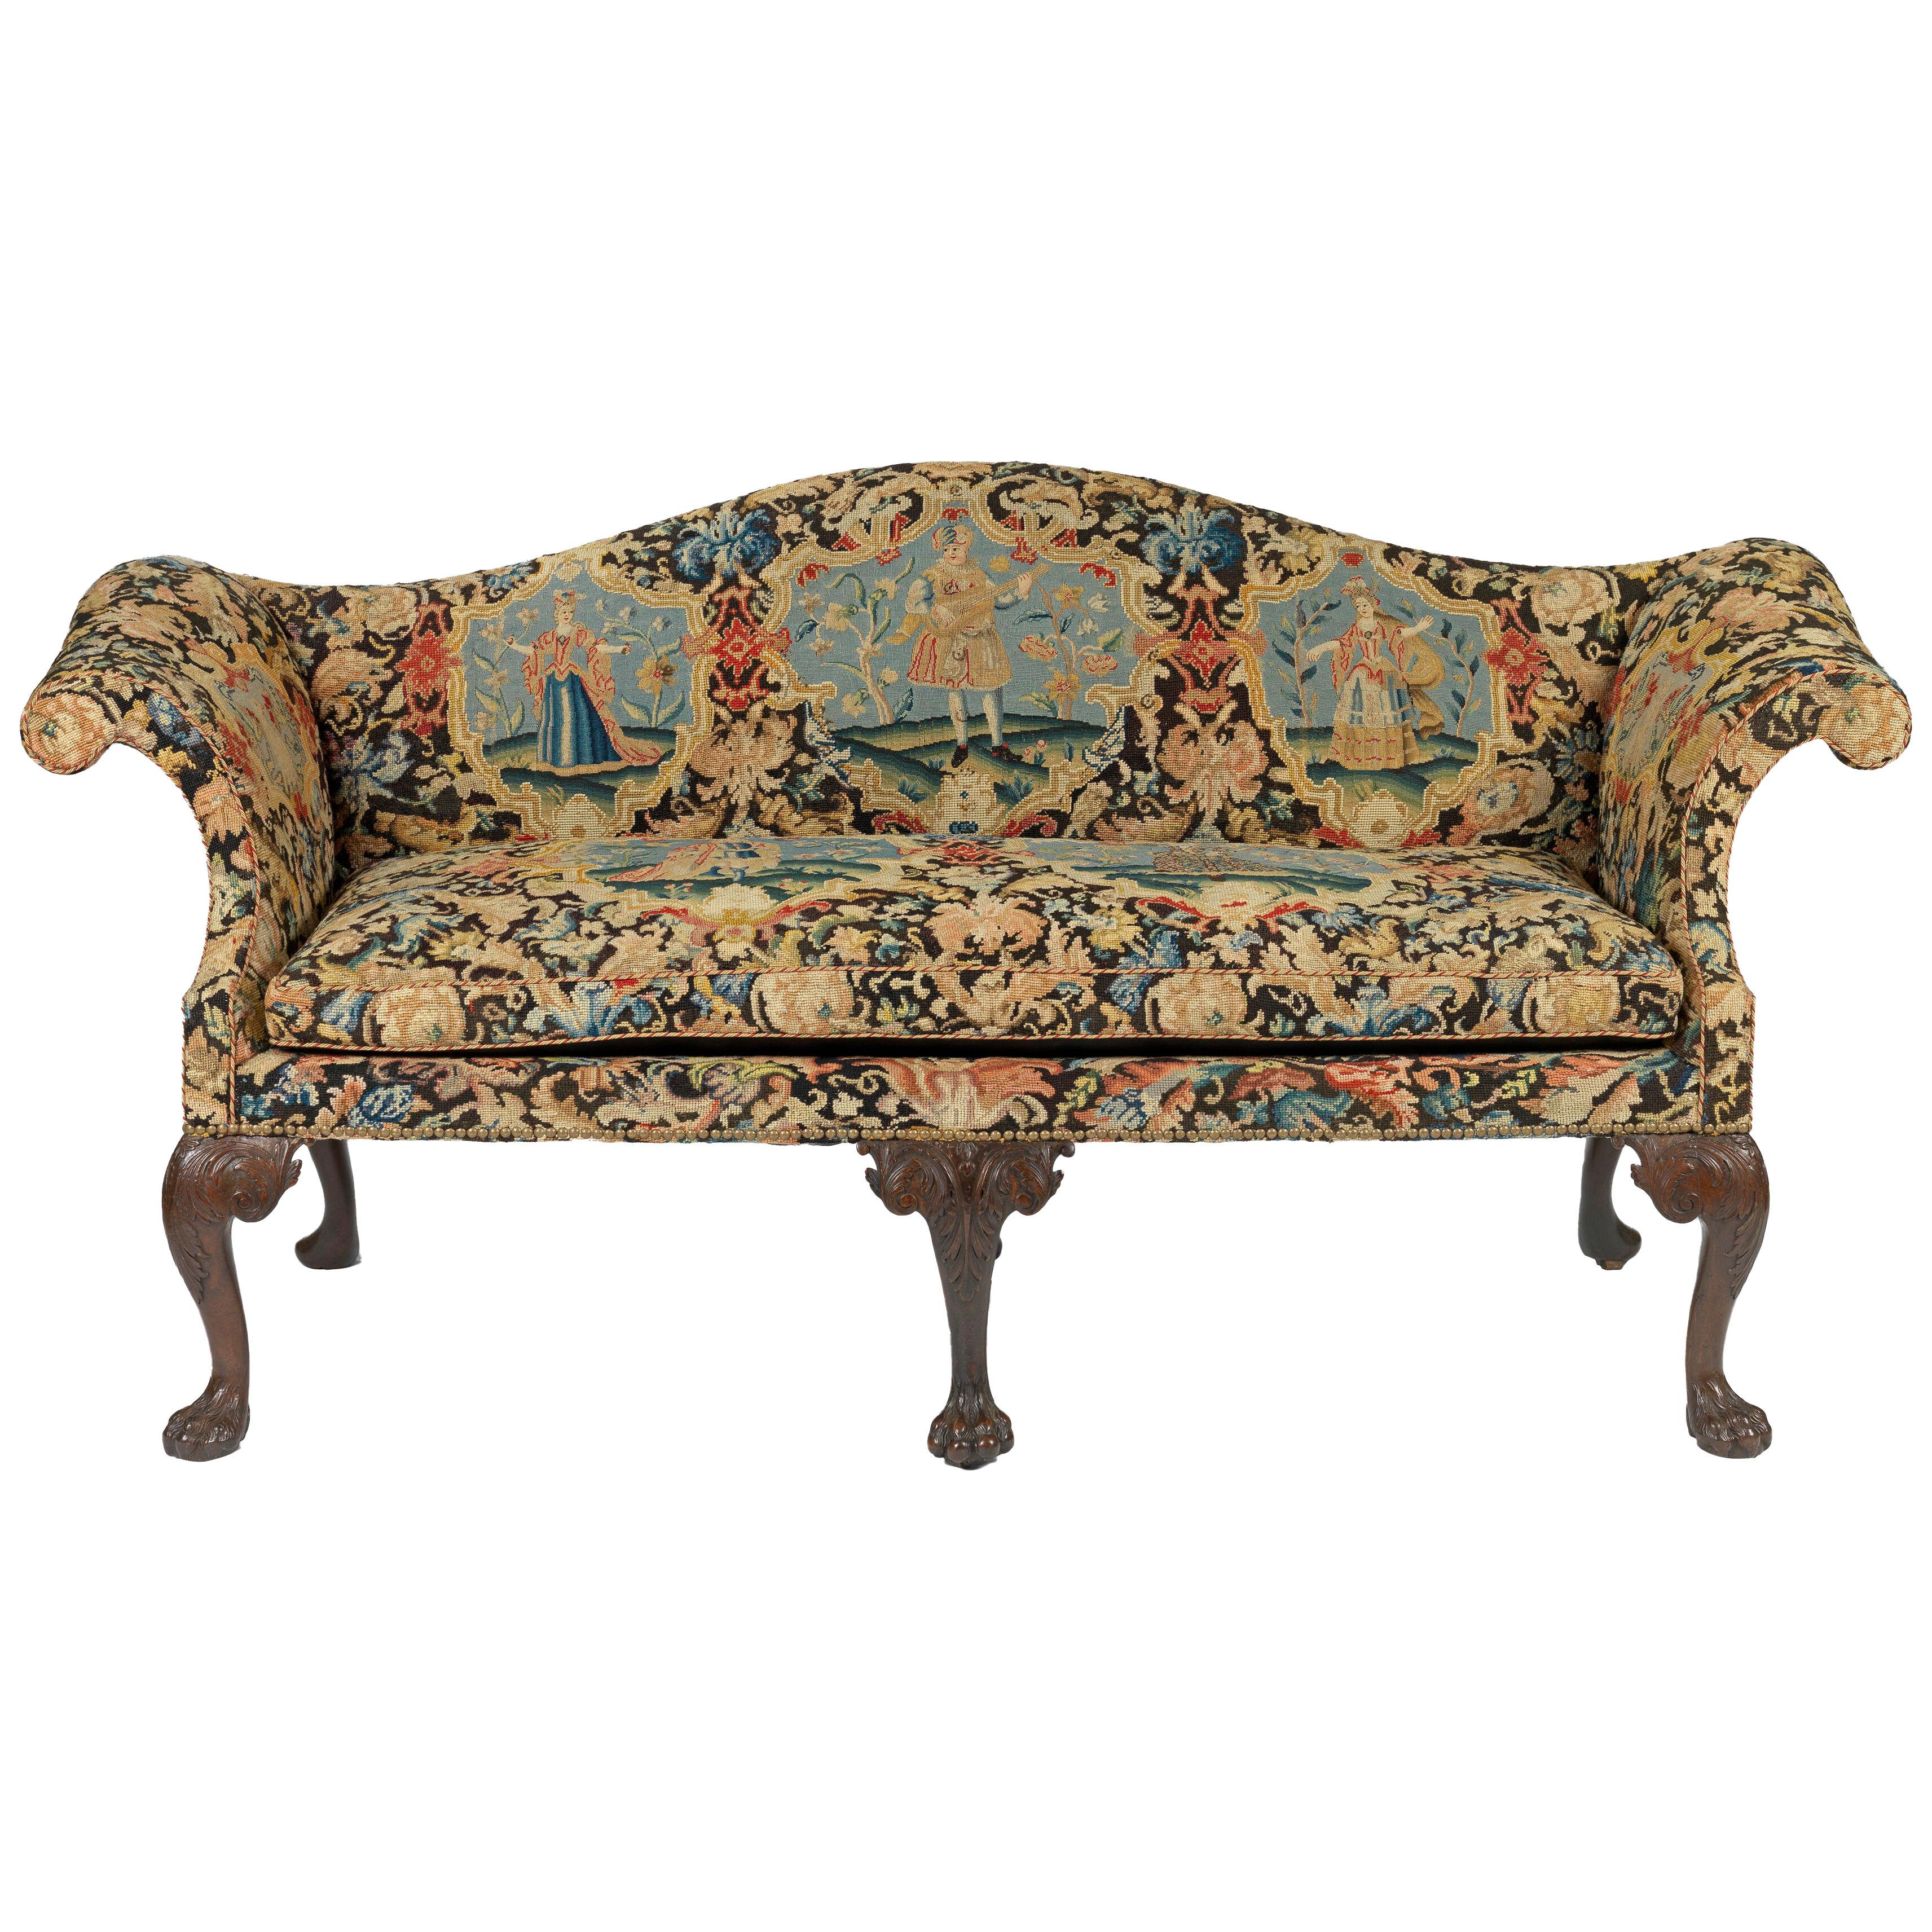 A George II Mahogany Settee upholstered in Needlework 